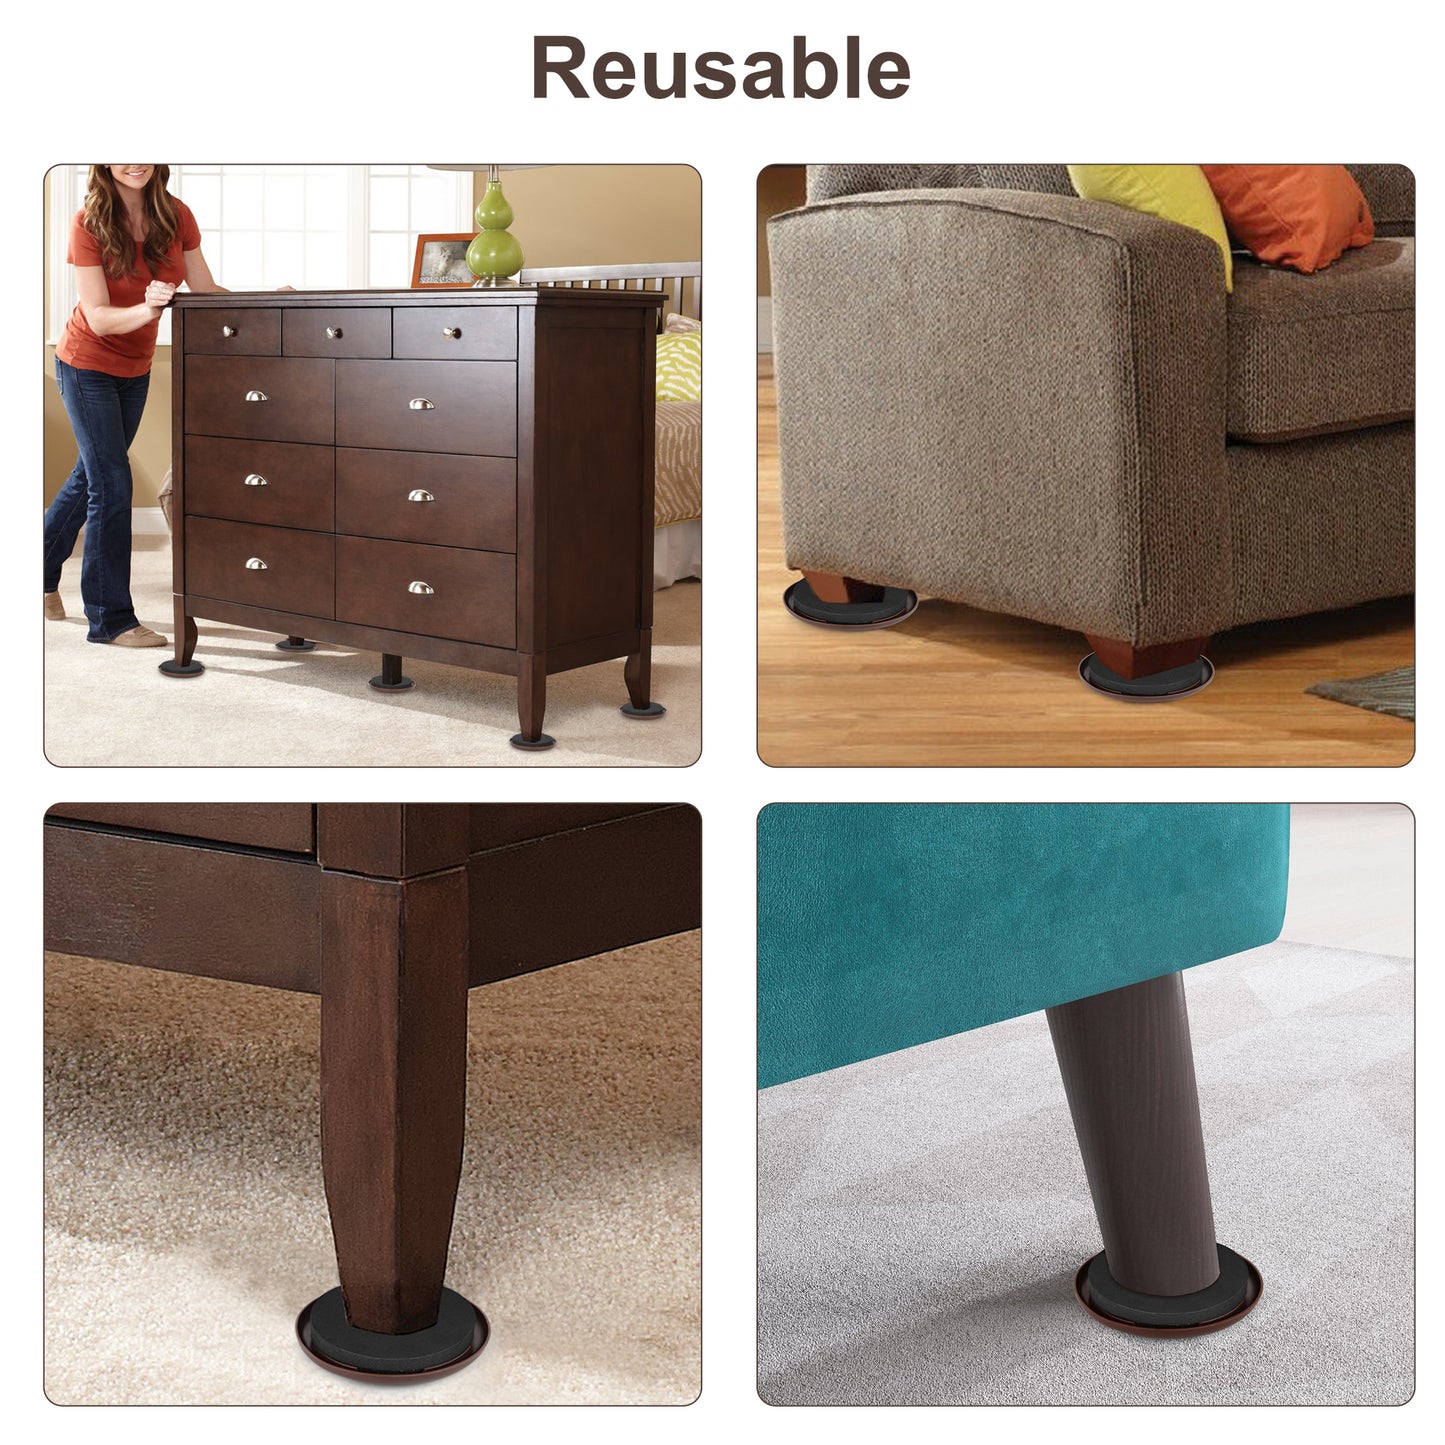 12pcs Furniture Felt Sliders - Furniture Sliders Pads Sliding Block Table Chair Leg Mat Floor Protector For Hardwood Rug (Brown)